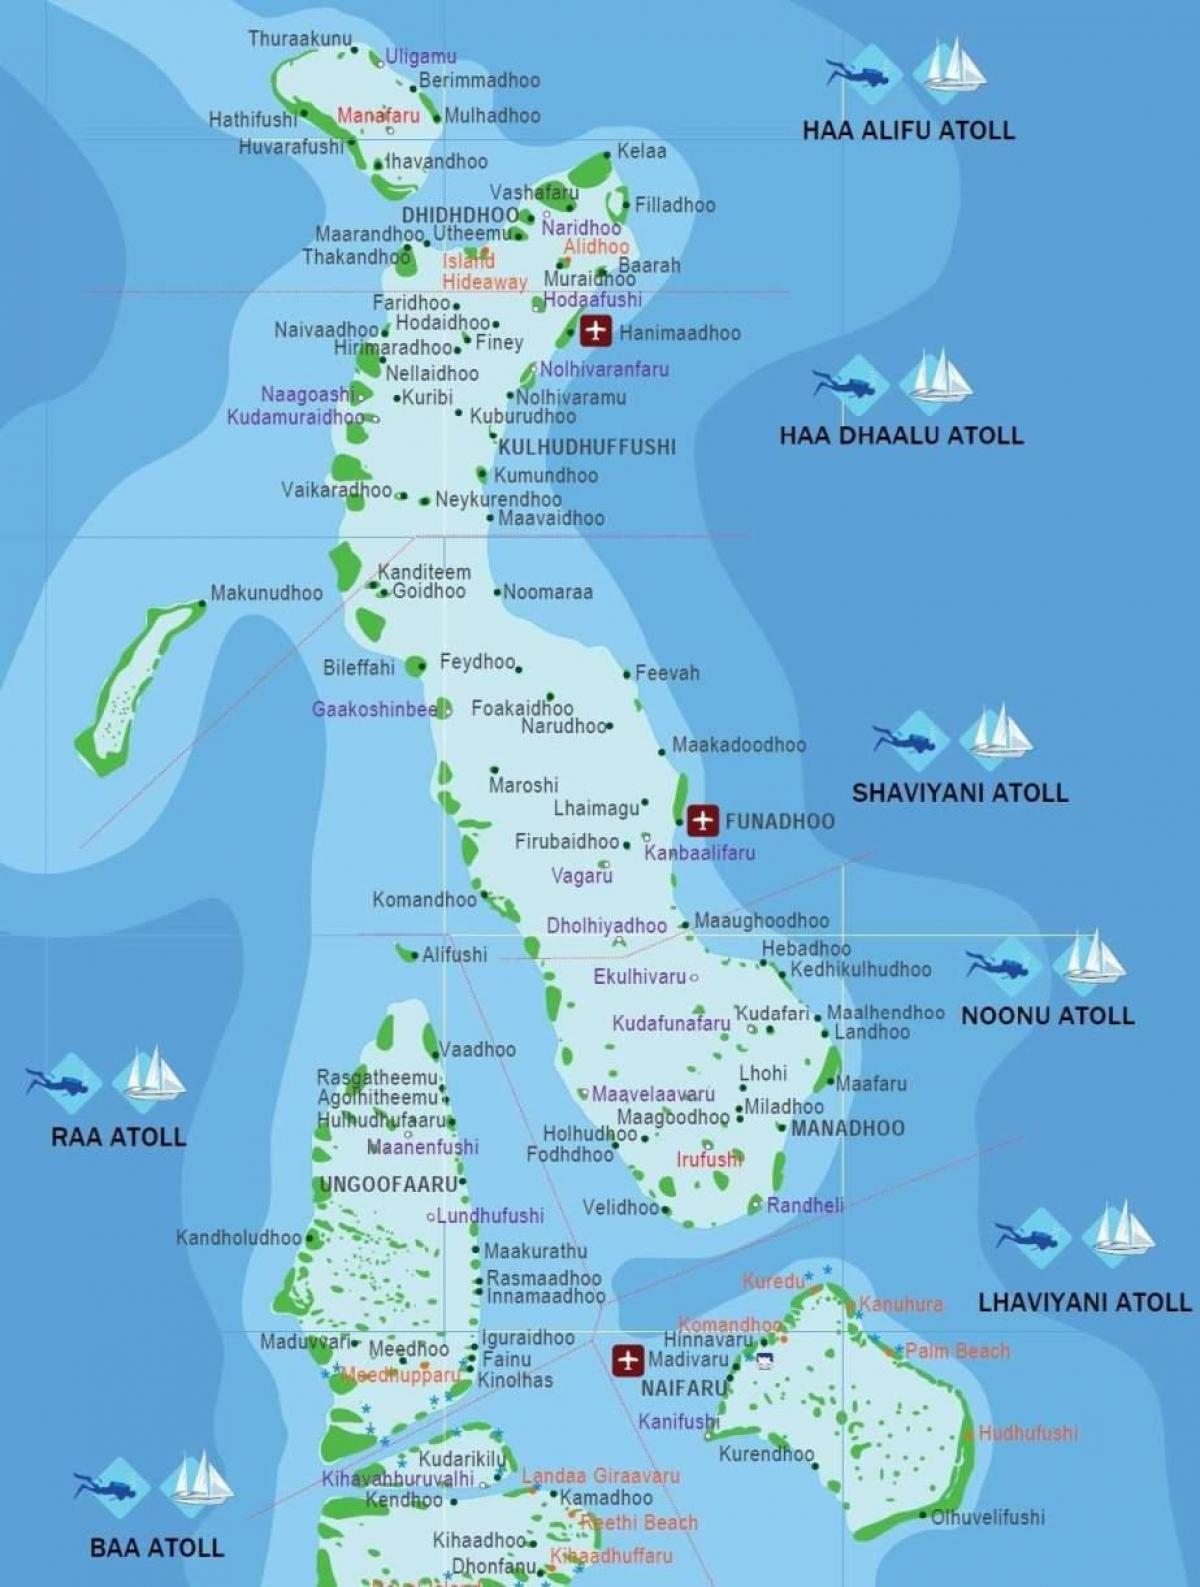 mapa completo das maldivas